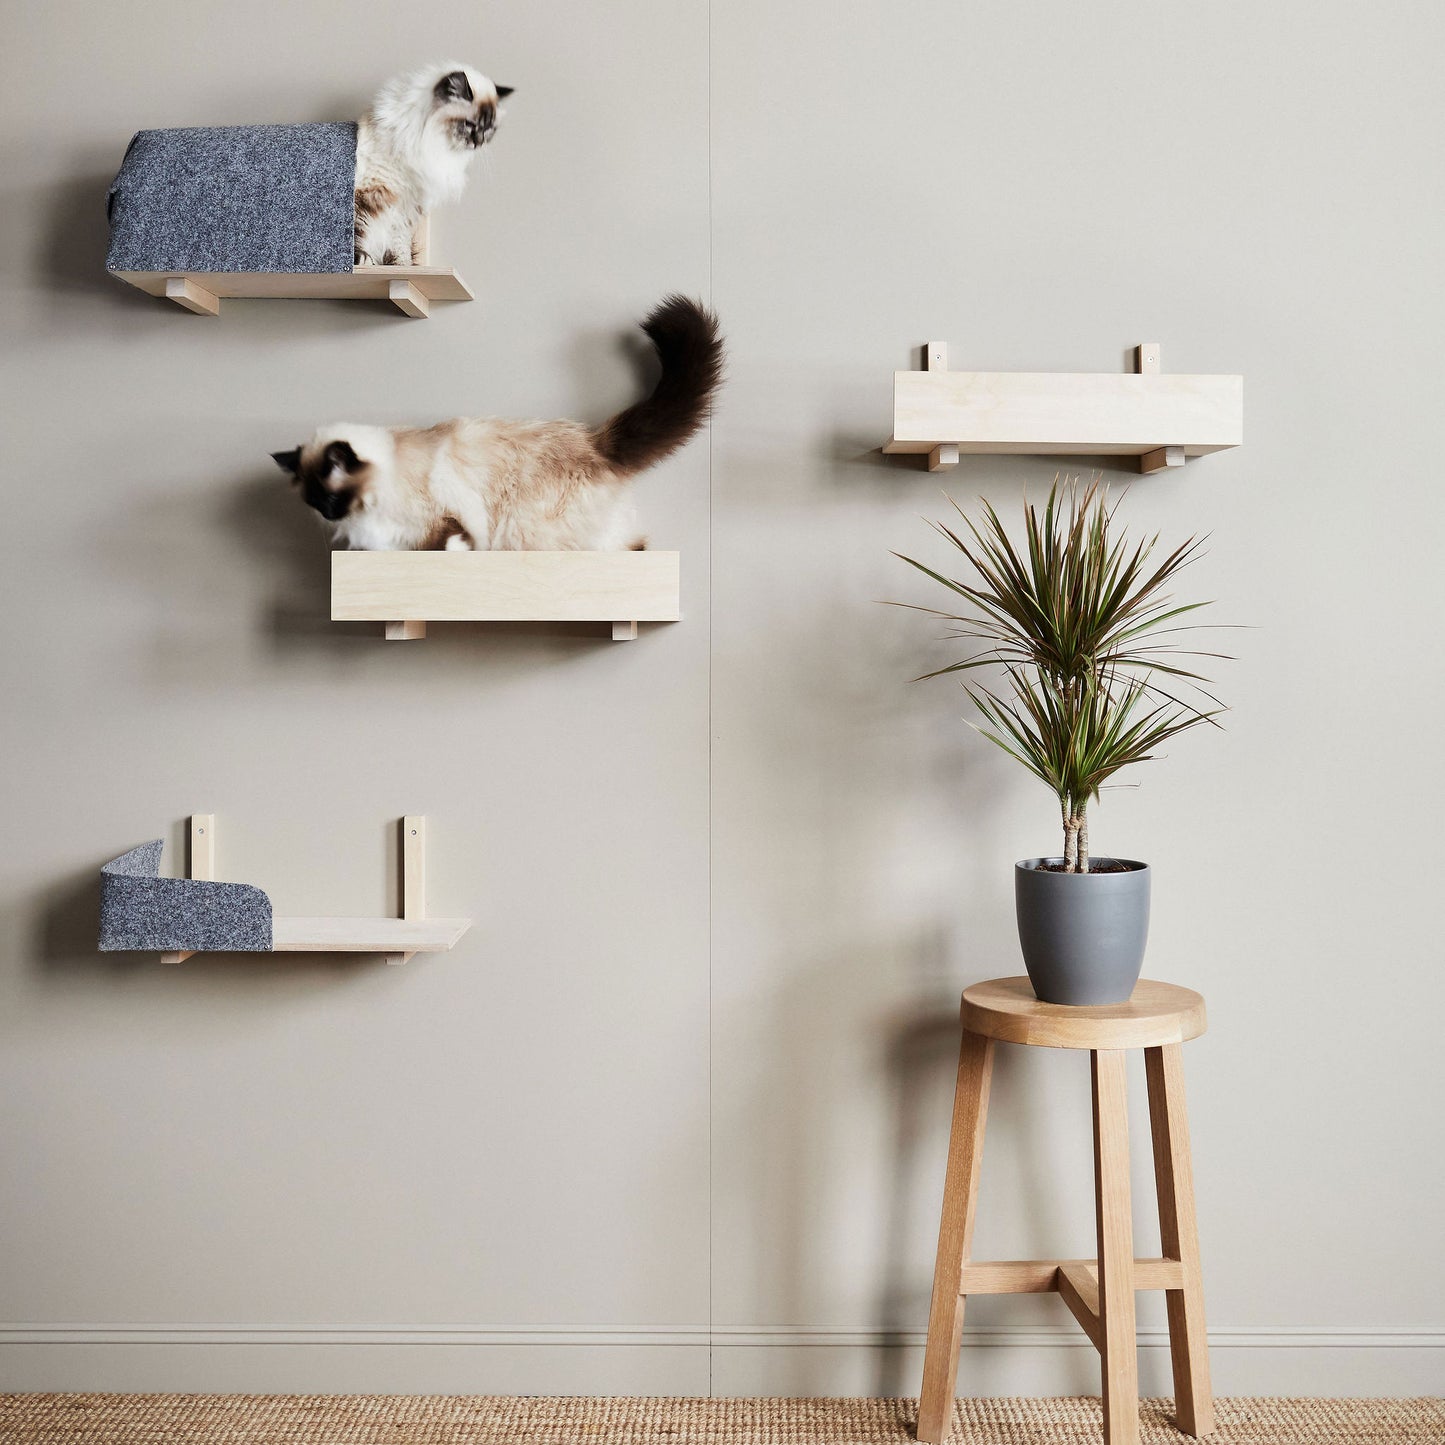 Kissapuu cat wall shelf, igloo